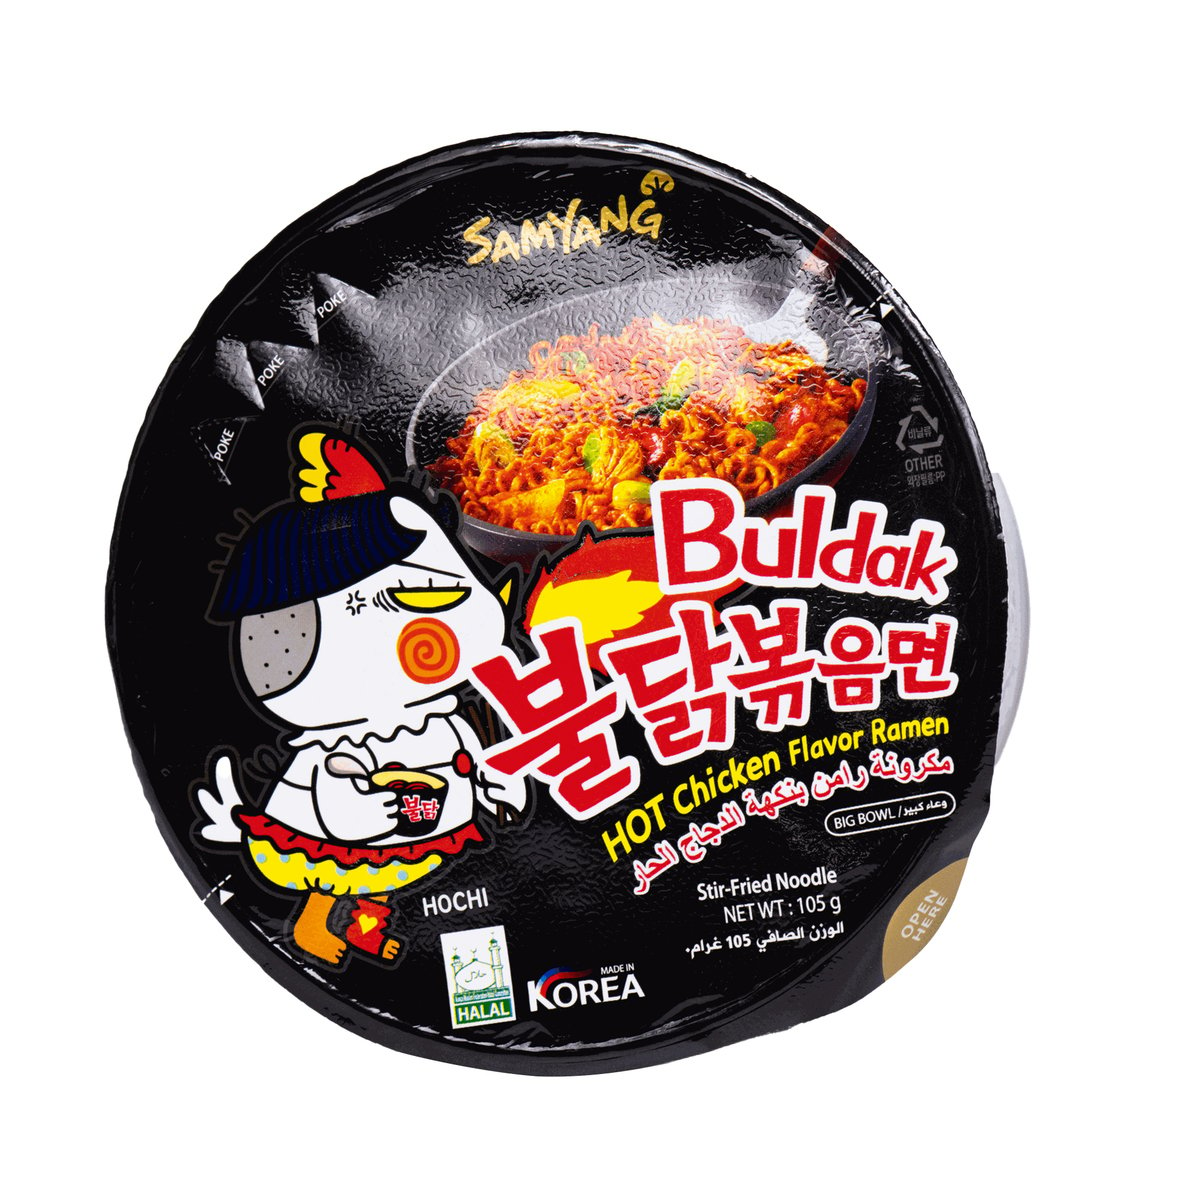 Samyang Buldak Hot Chicken Flavor Ramen 105 g